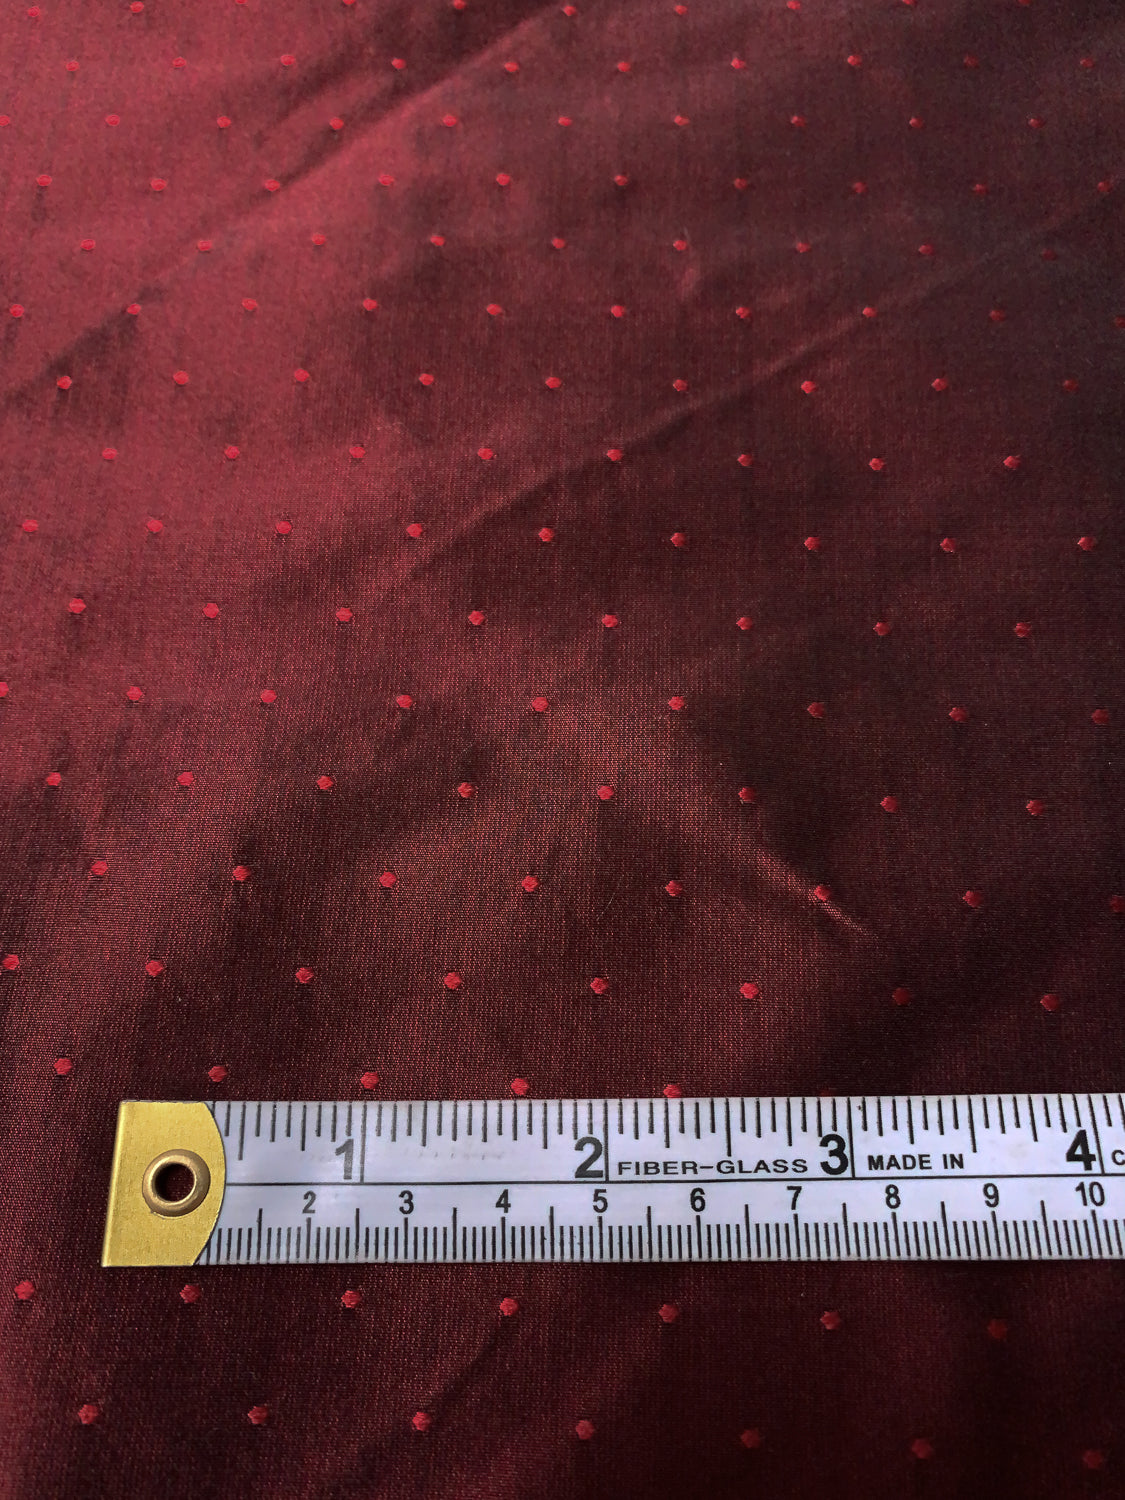 Yarn-Dyed Iridescent Silk Taffeta with Pin Dot Pattern - Wine Red / Black